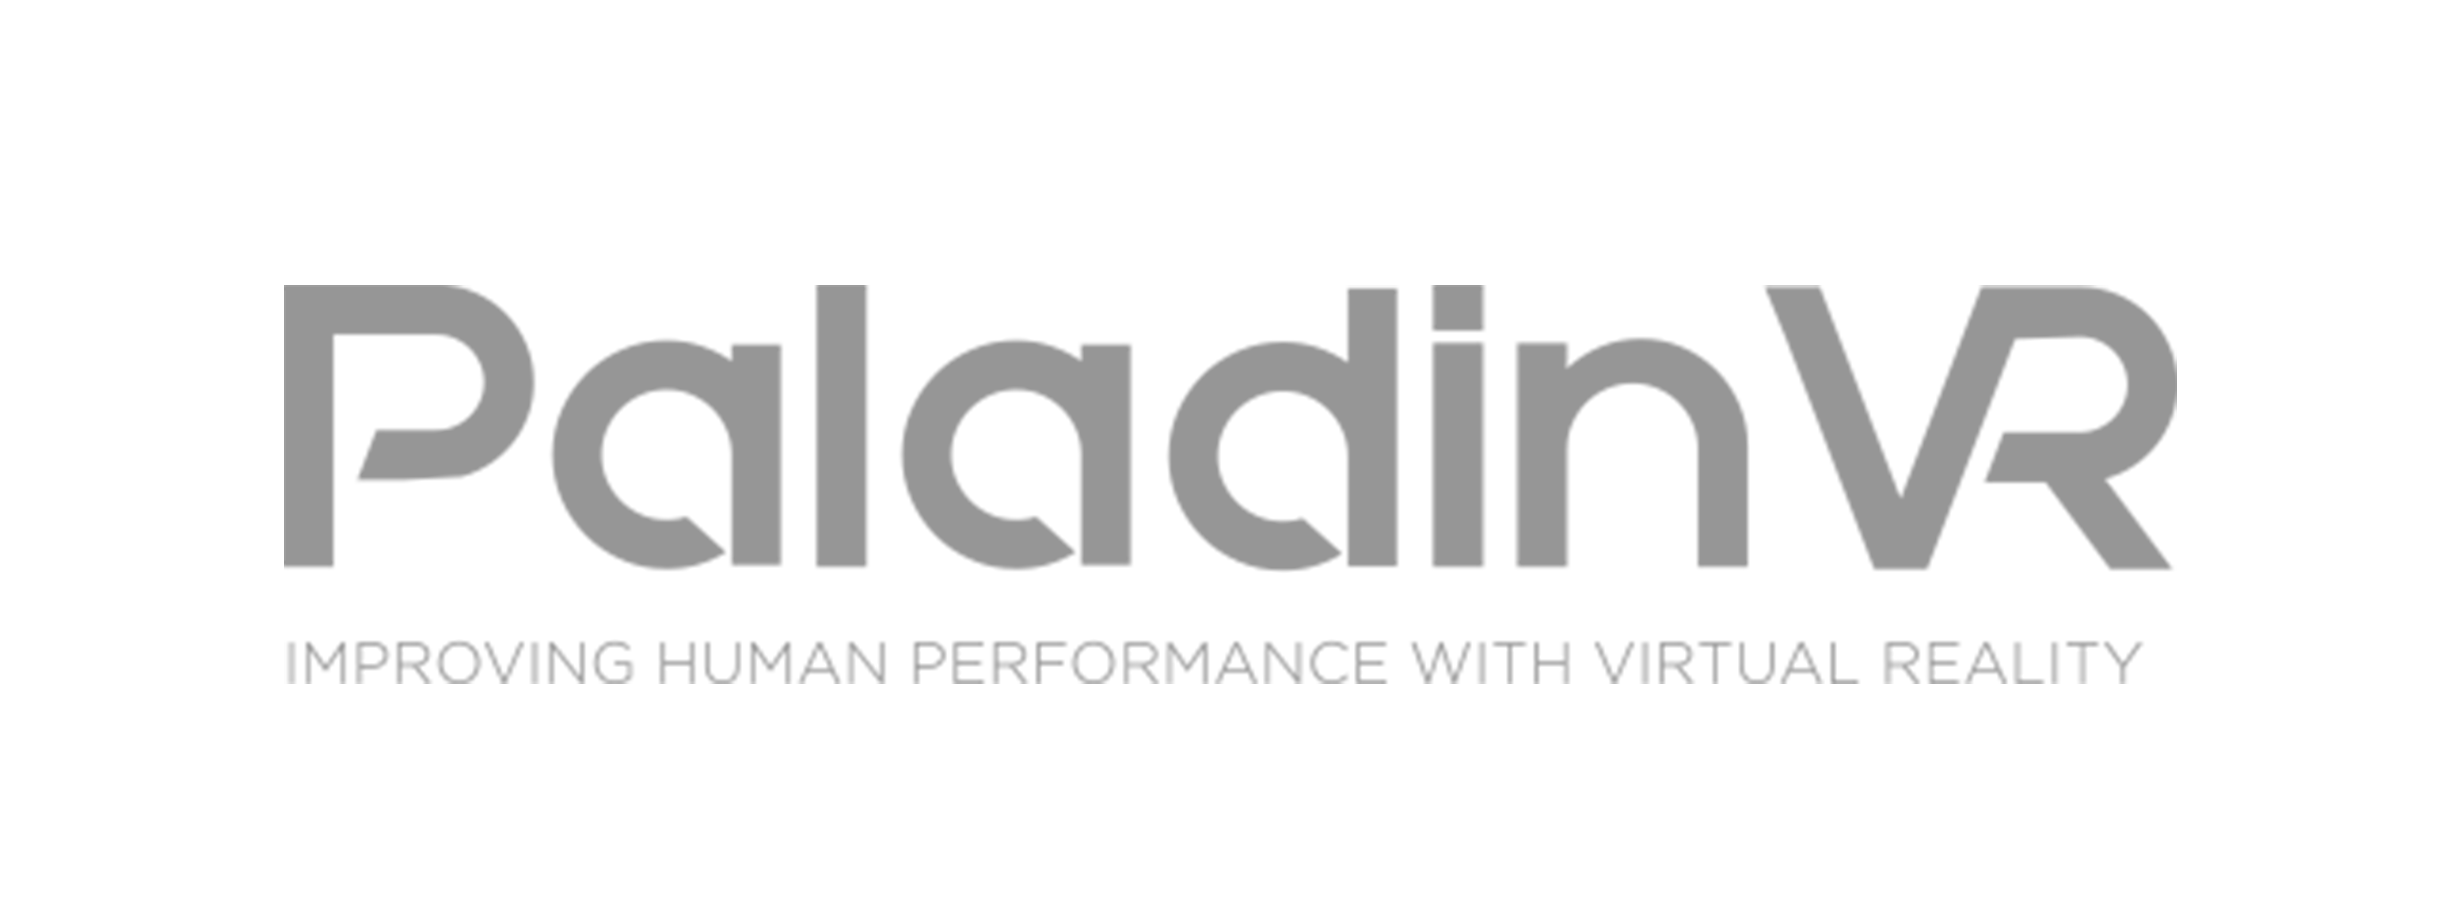 paladinVR_logo.png